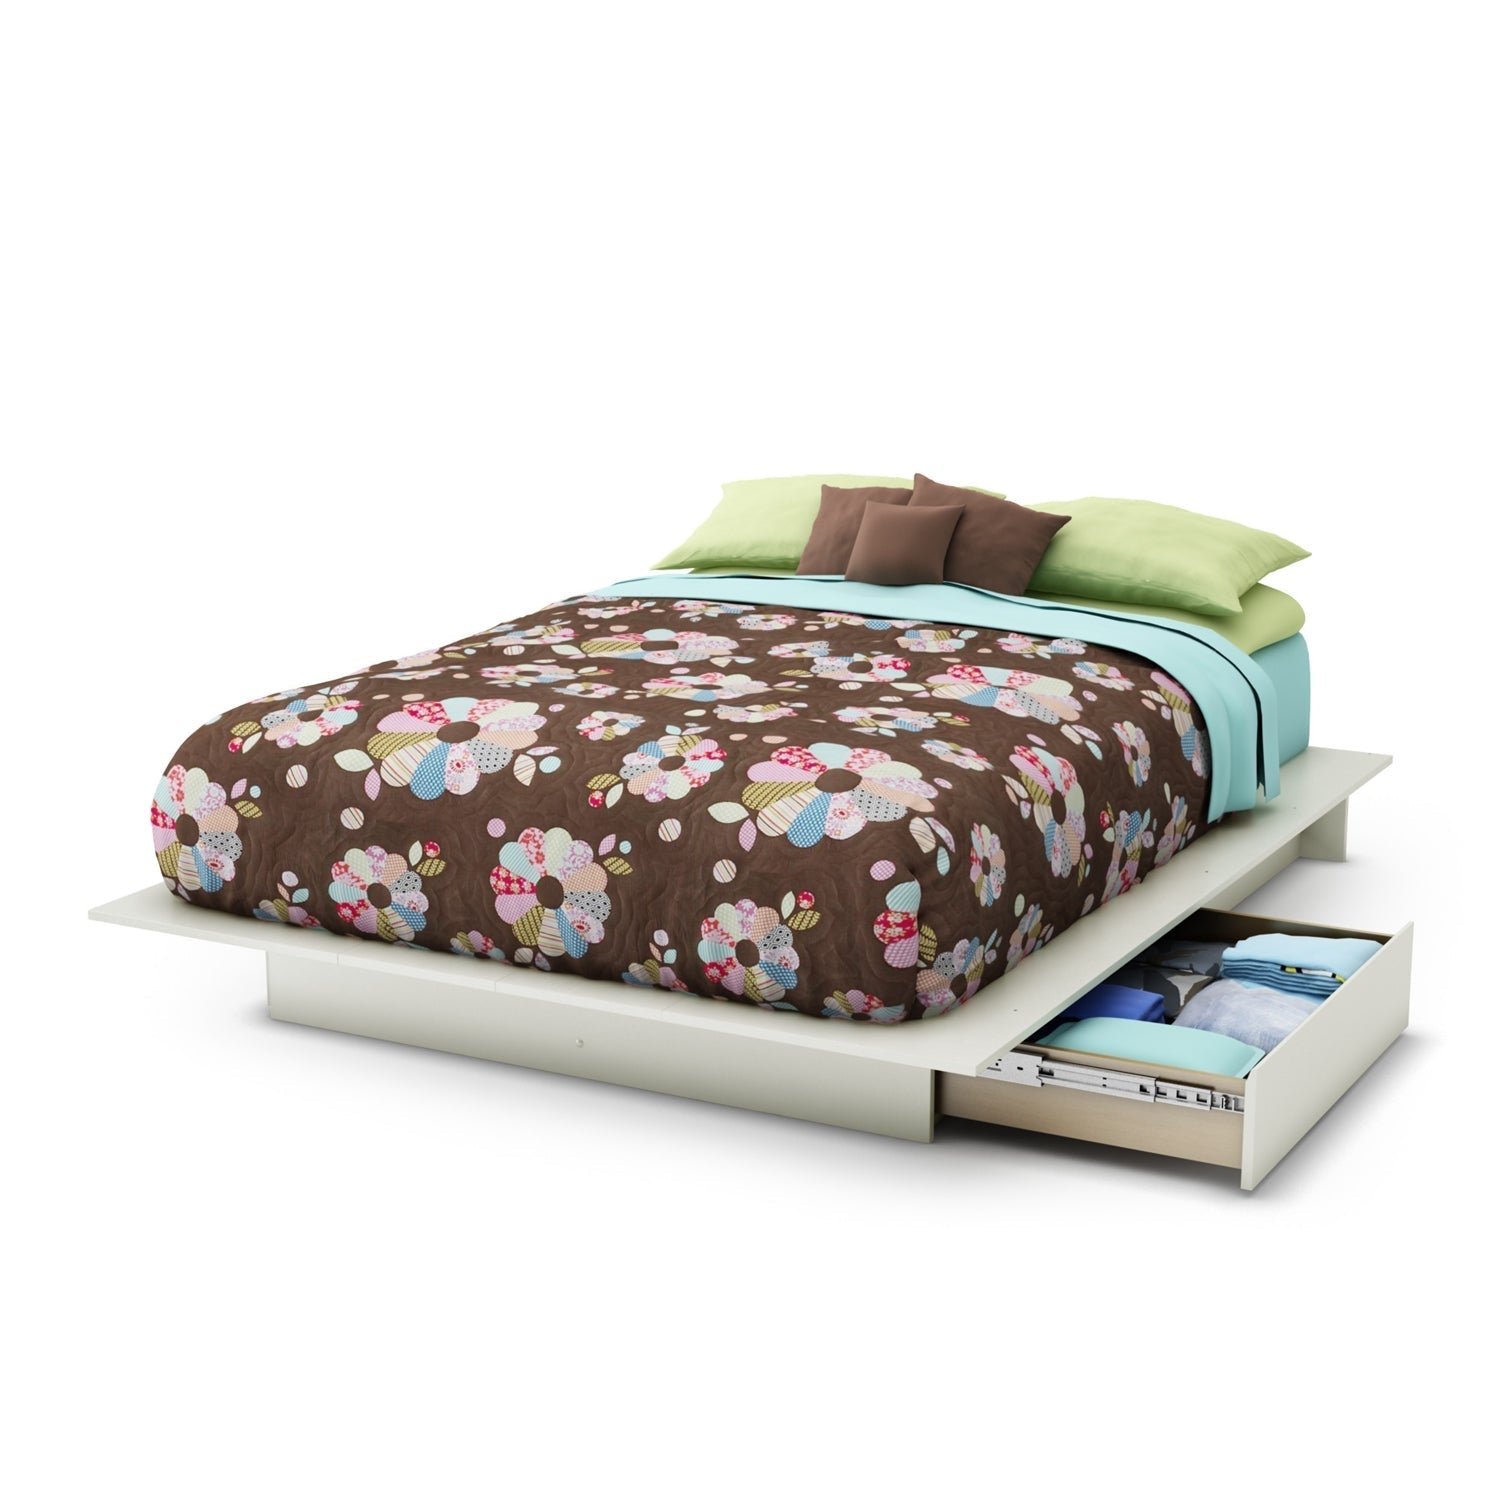 Bedroom > Bed Frames > Platform Beds - Queen Size Modern Platform Bed With 2 Storage Drawers In White Finish